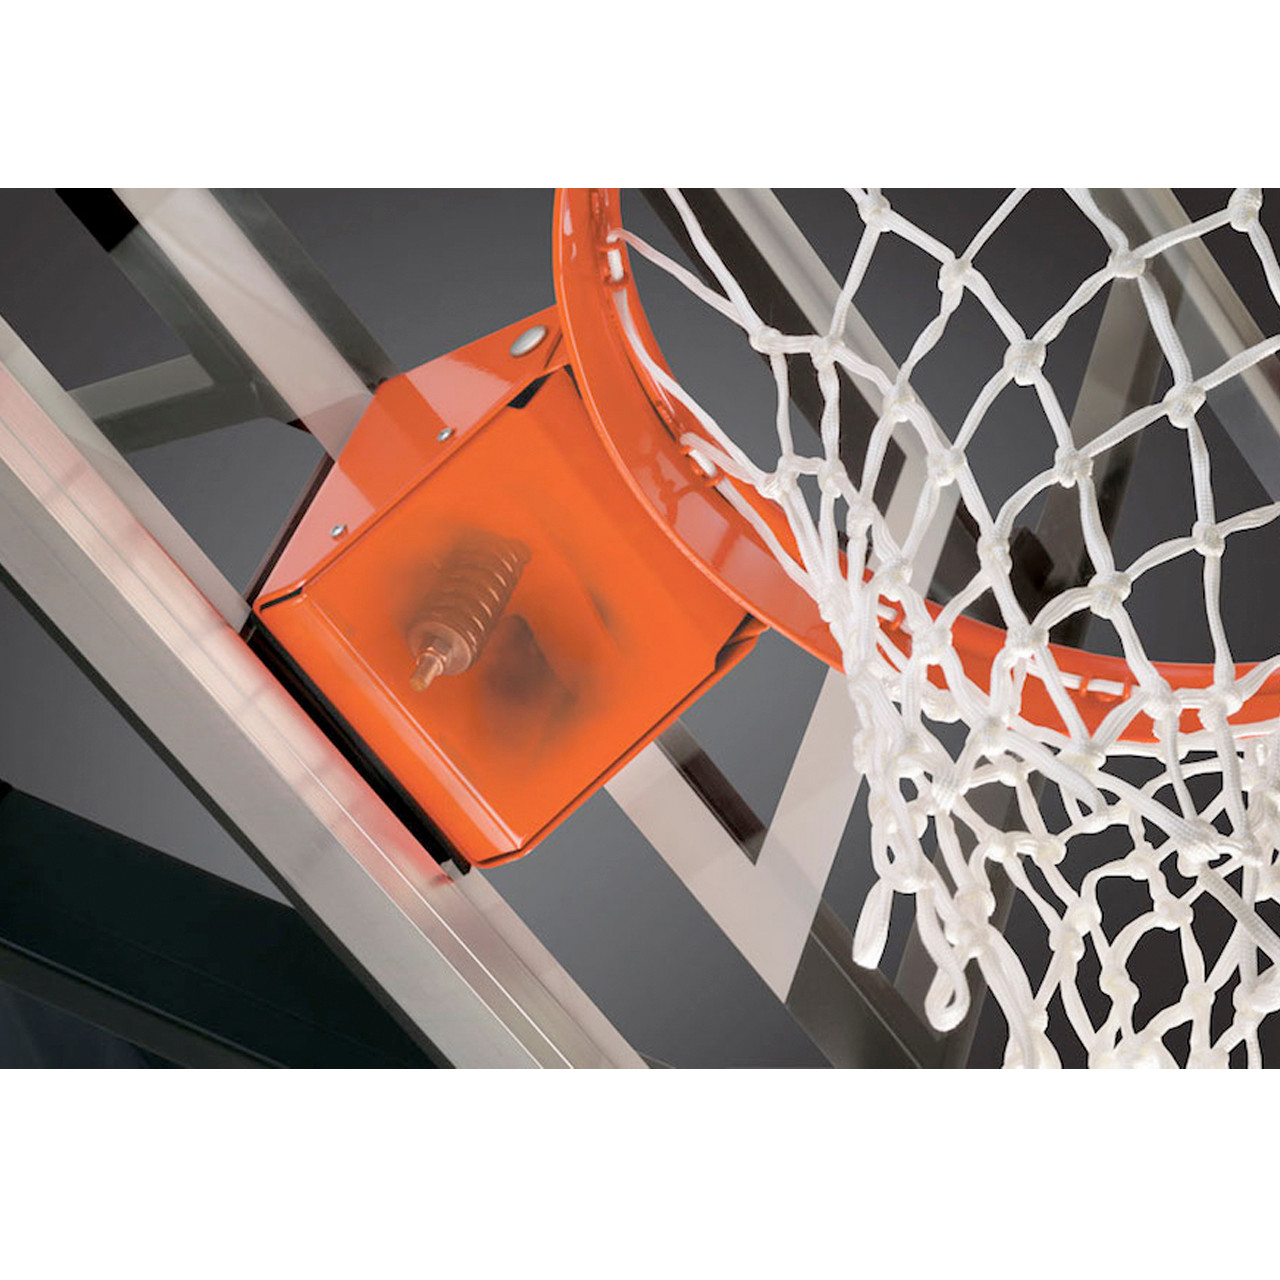 GS72C 72 inch In Ground Basketball Hoop – Goalrilla